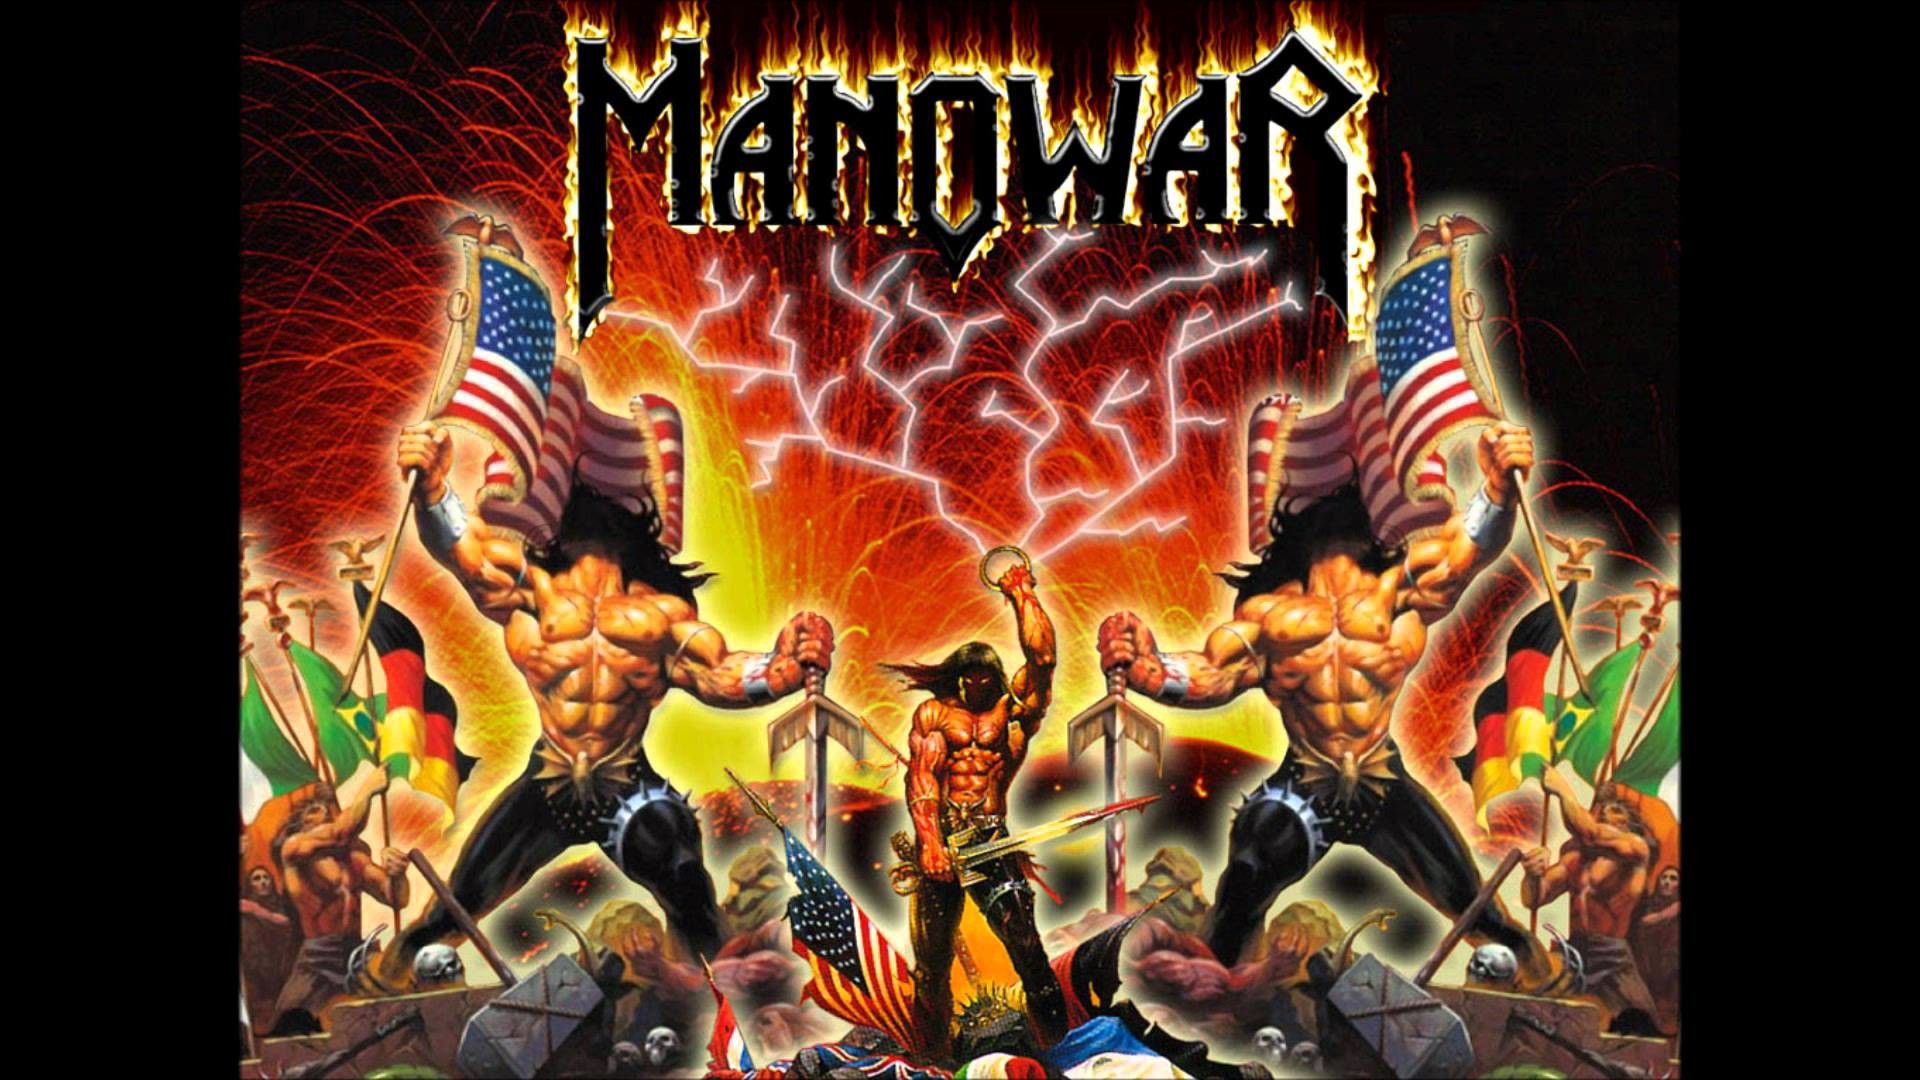 Manowar mp3. Мановар фото группы. Группа Manowar 2021. Постеры группы Manowar. Обложки дисков Manowar.